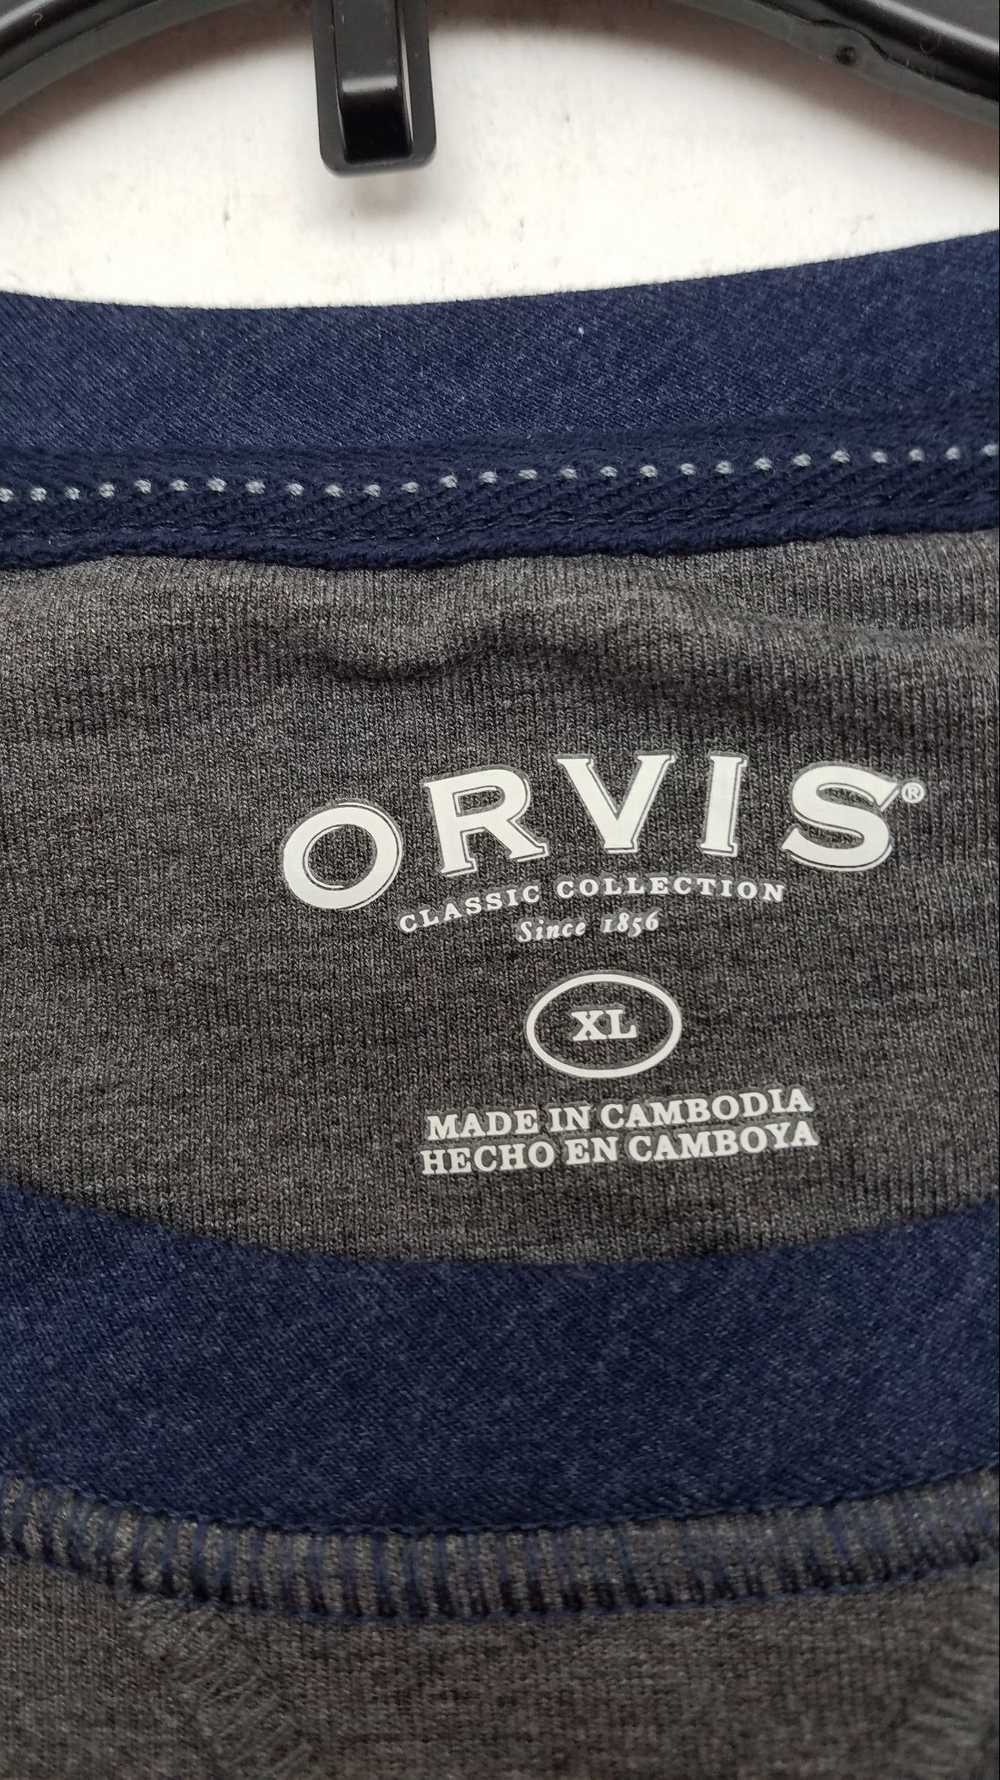 Men's ORVIS Gray/Blue T Shirt XL - image 3